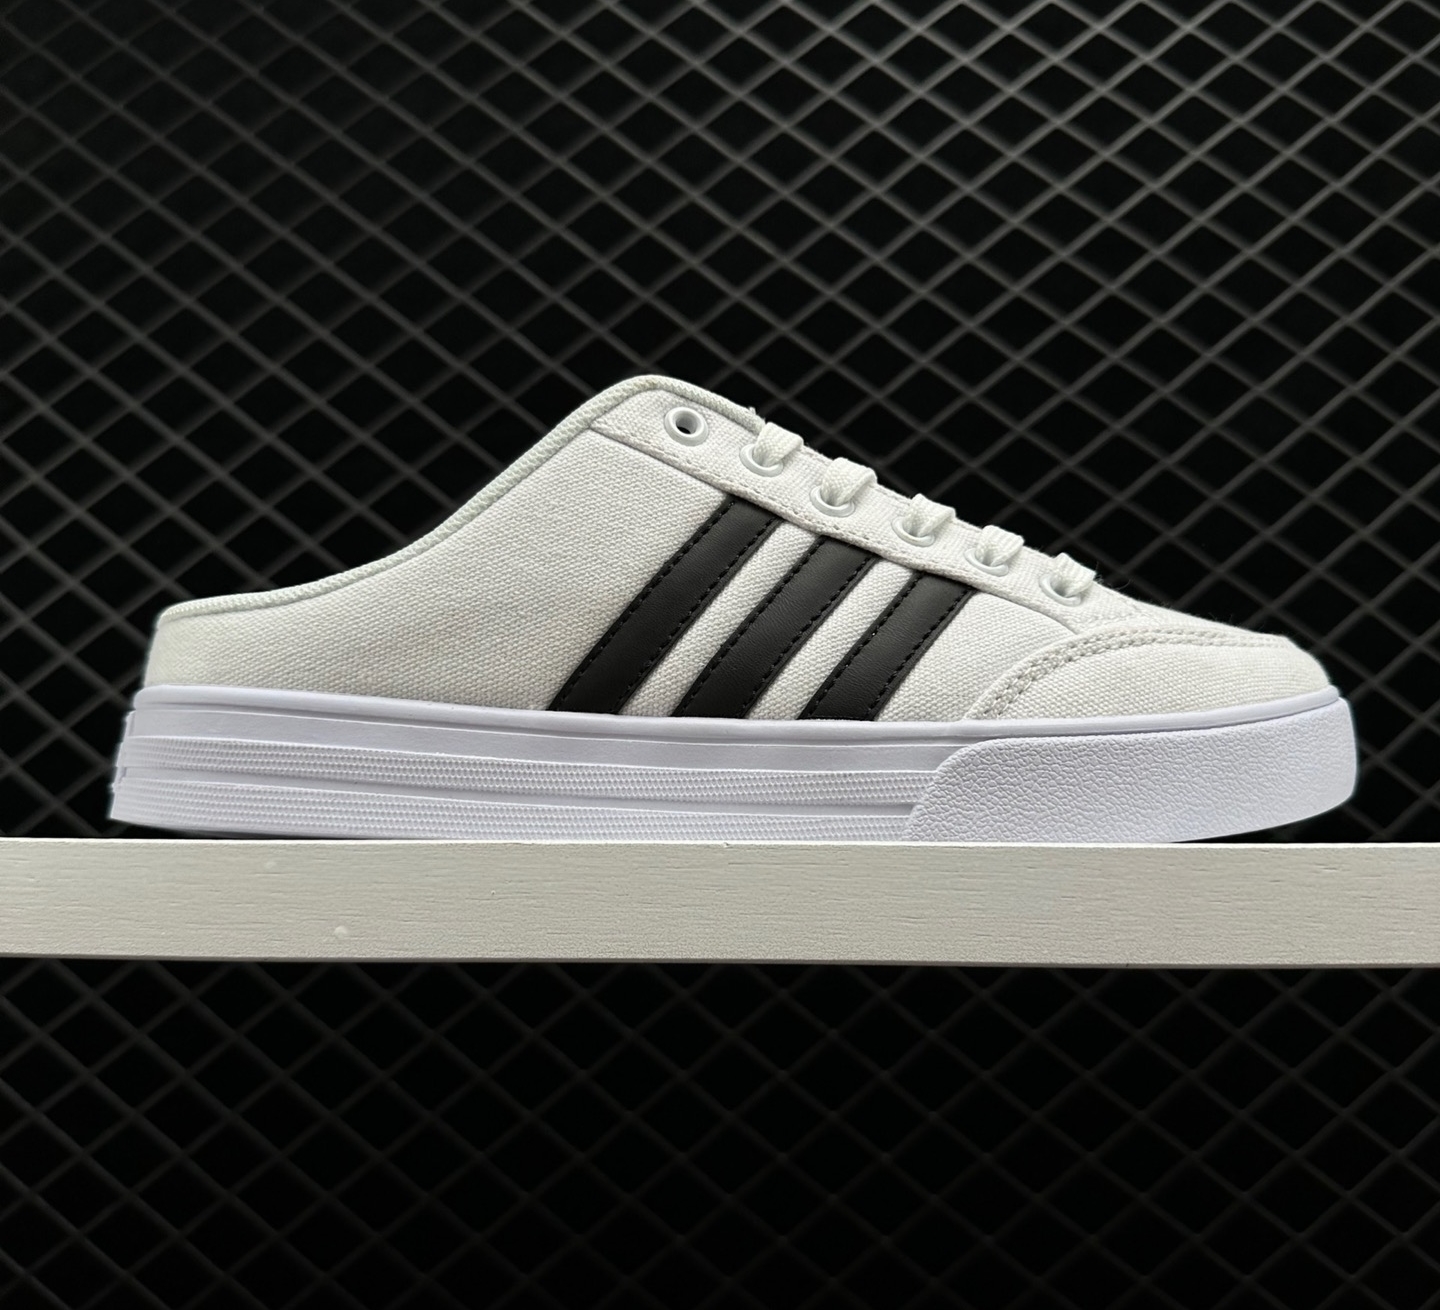 Adidas VS Set Mule White Black FX4849: Sleek and Stylish Footwear